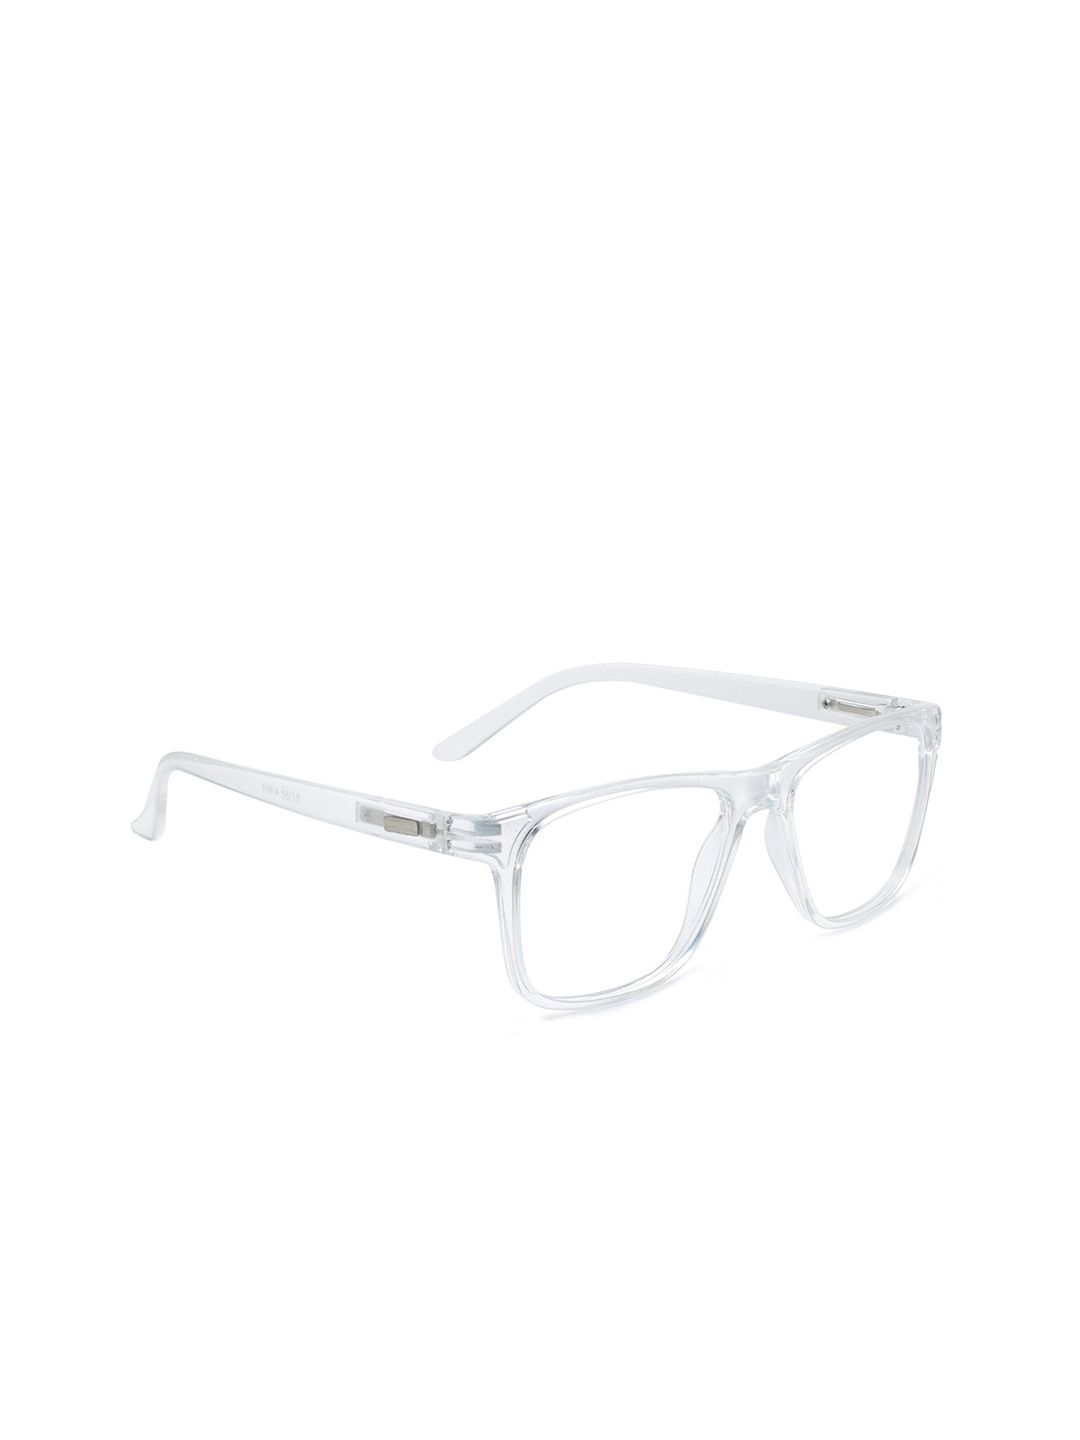 Peter Jones Eyewear Unisex Transparent Full Rim Wayfarer Frames M108T-Transparent Price in India